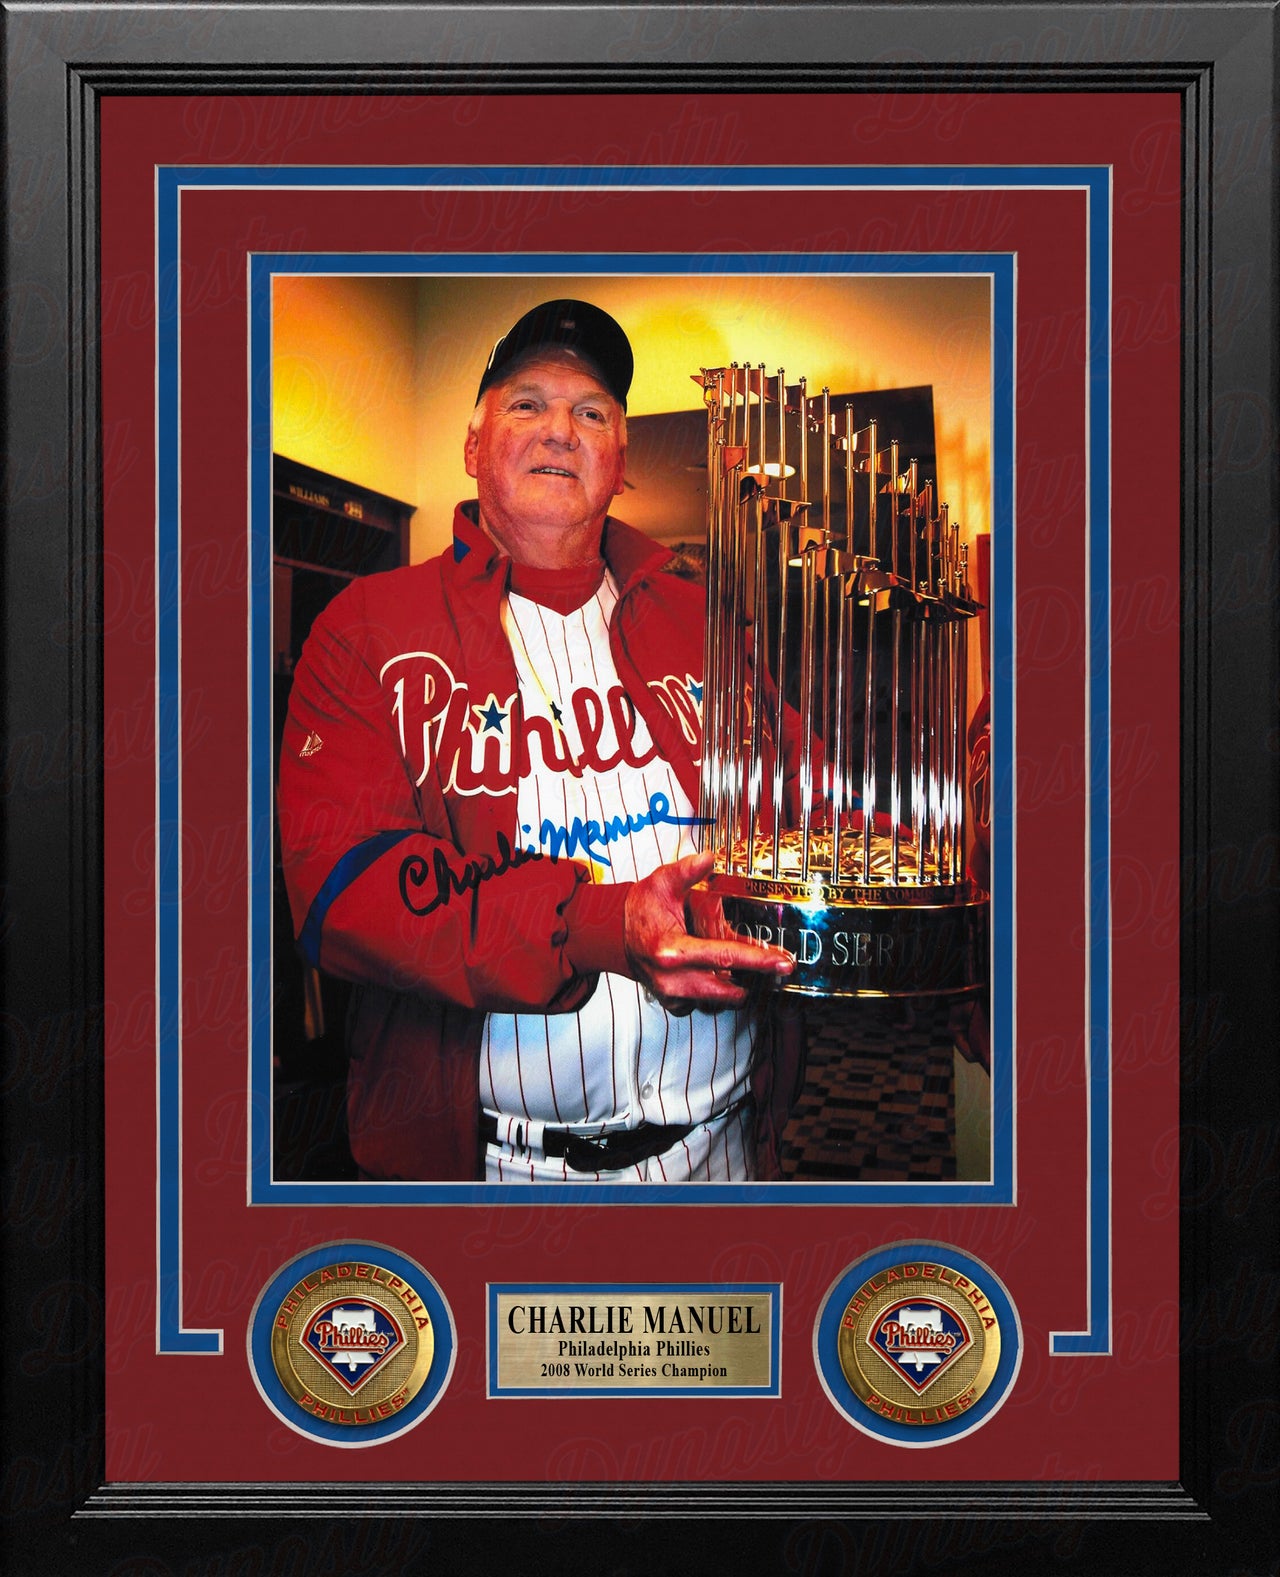 Charlie Manuel 2008 World Series Trophy Philadelphia Phillies Autographed 8x10 Framed Baseball Photo